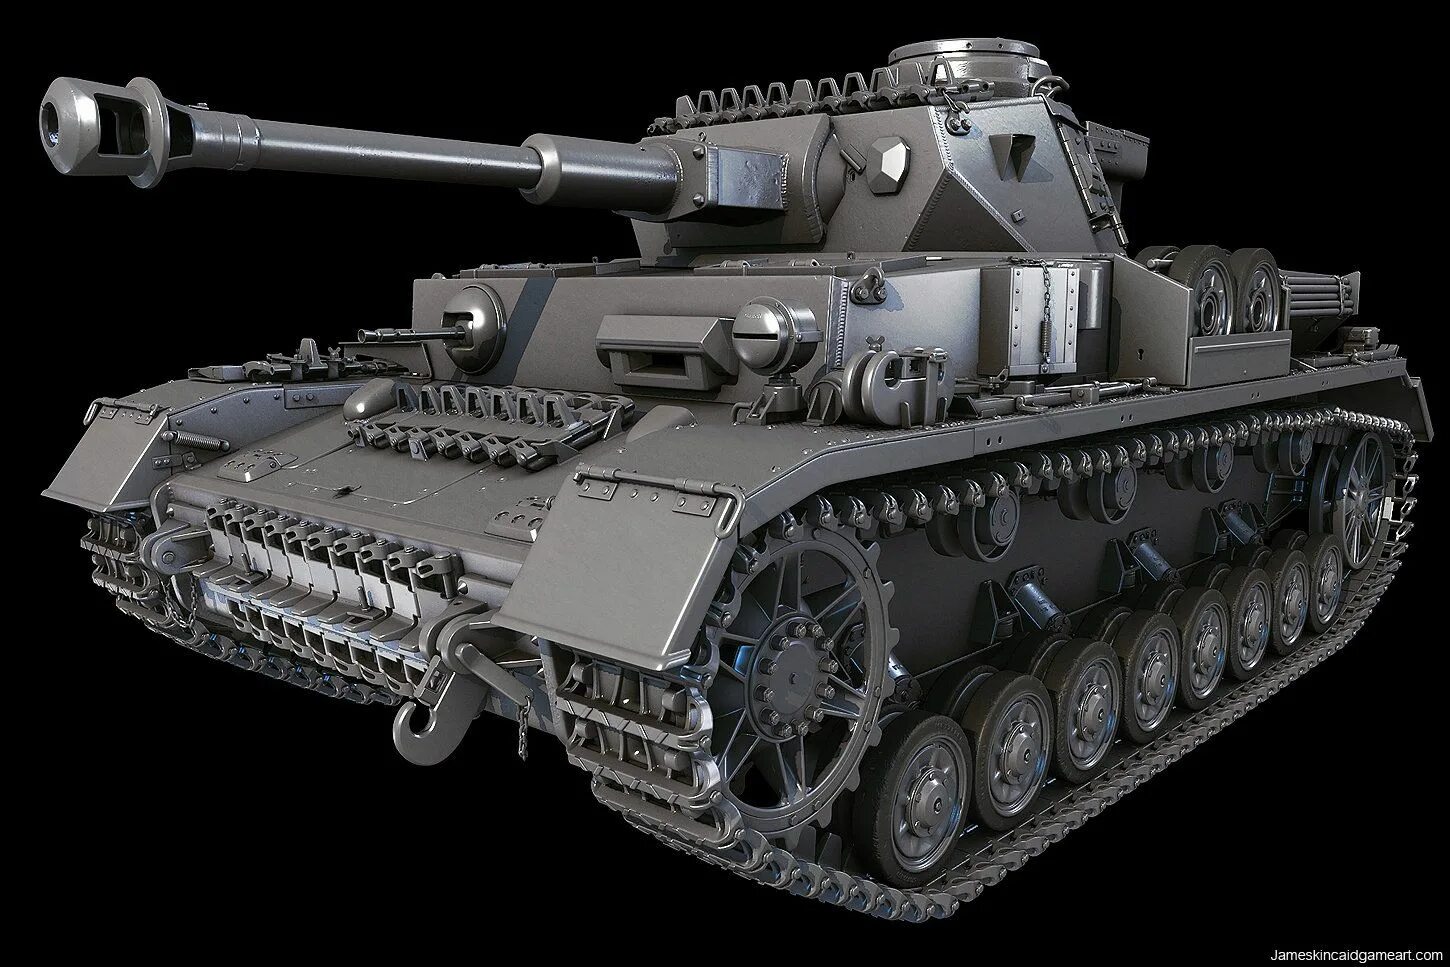 Panzer iv. Танк PZ 4. Танк Panzer 4. Т-4 танк Германия. Немецкий танк панцер 4.